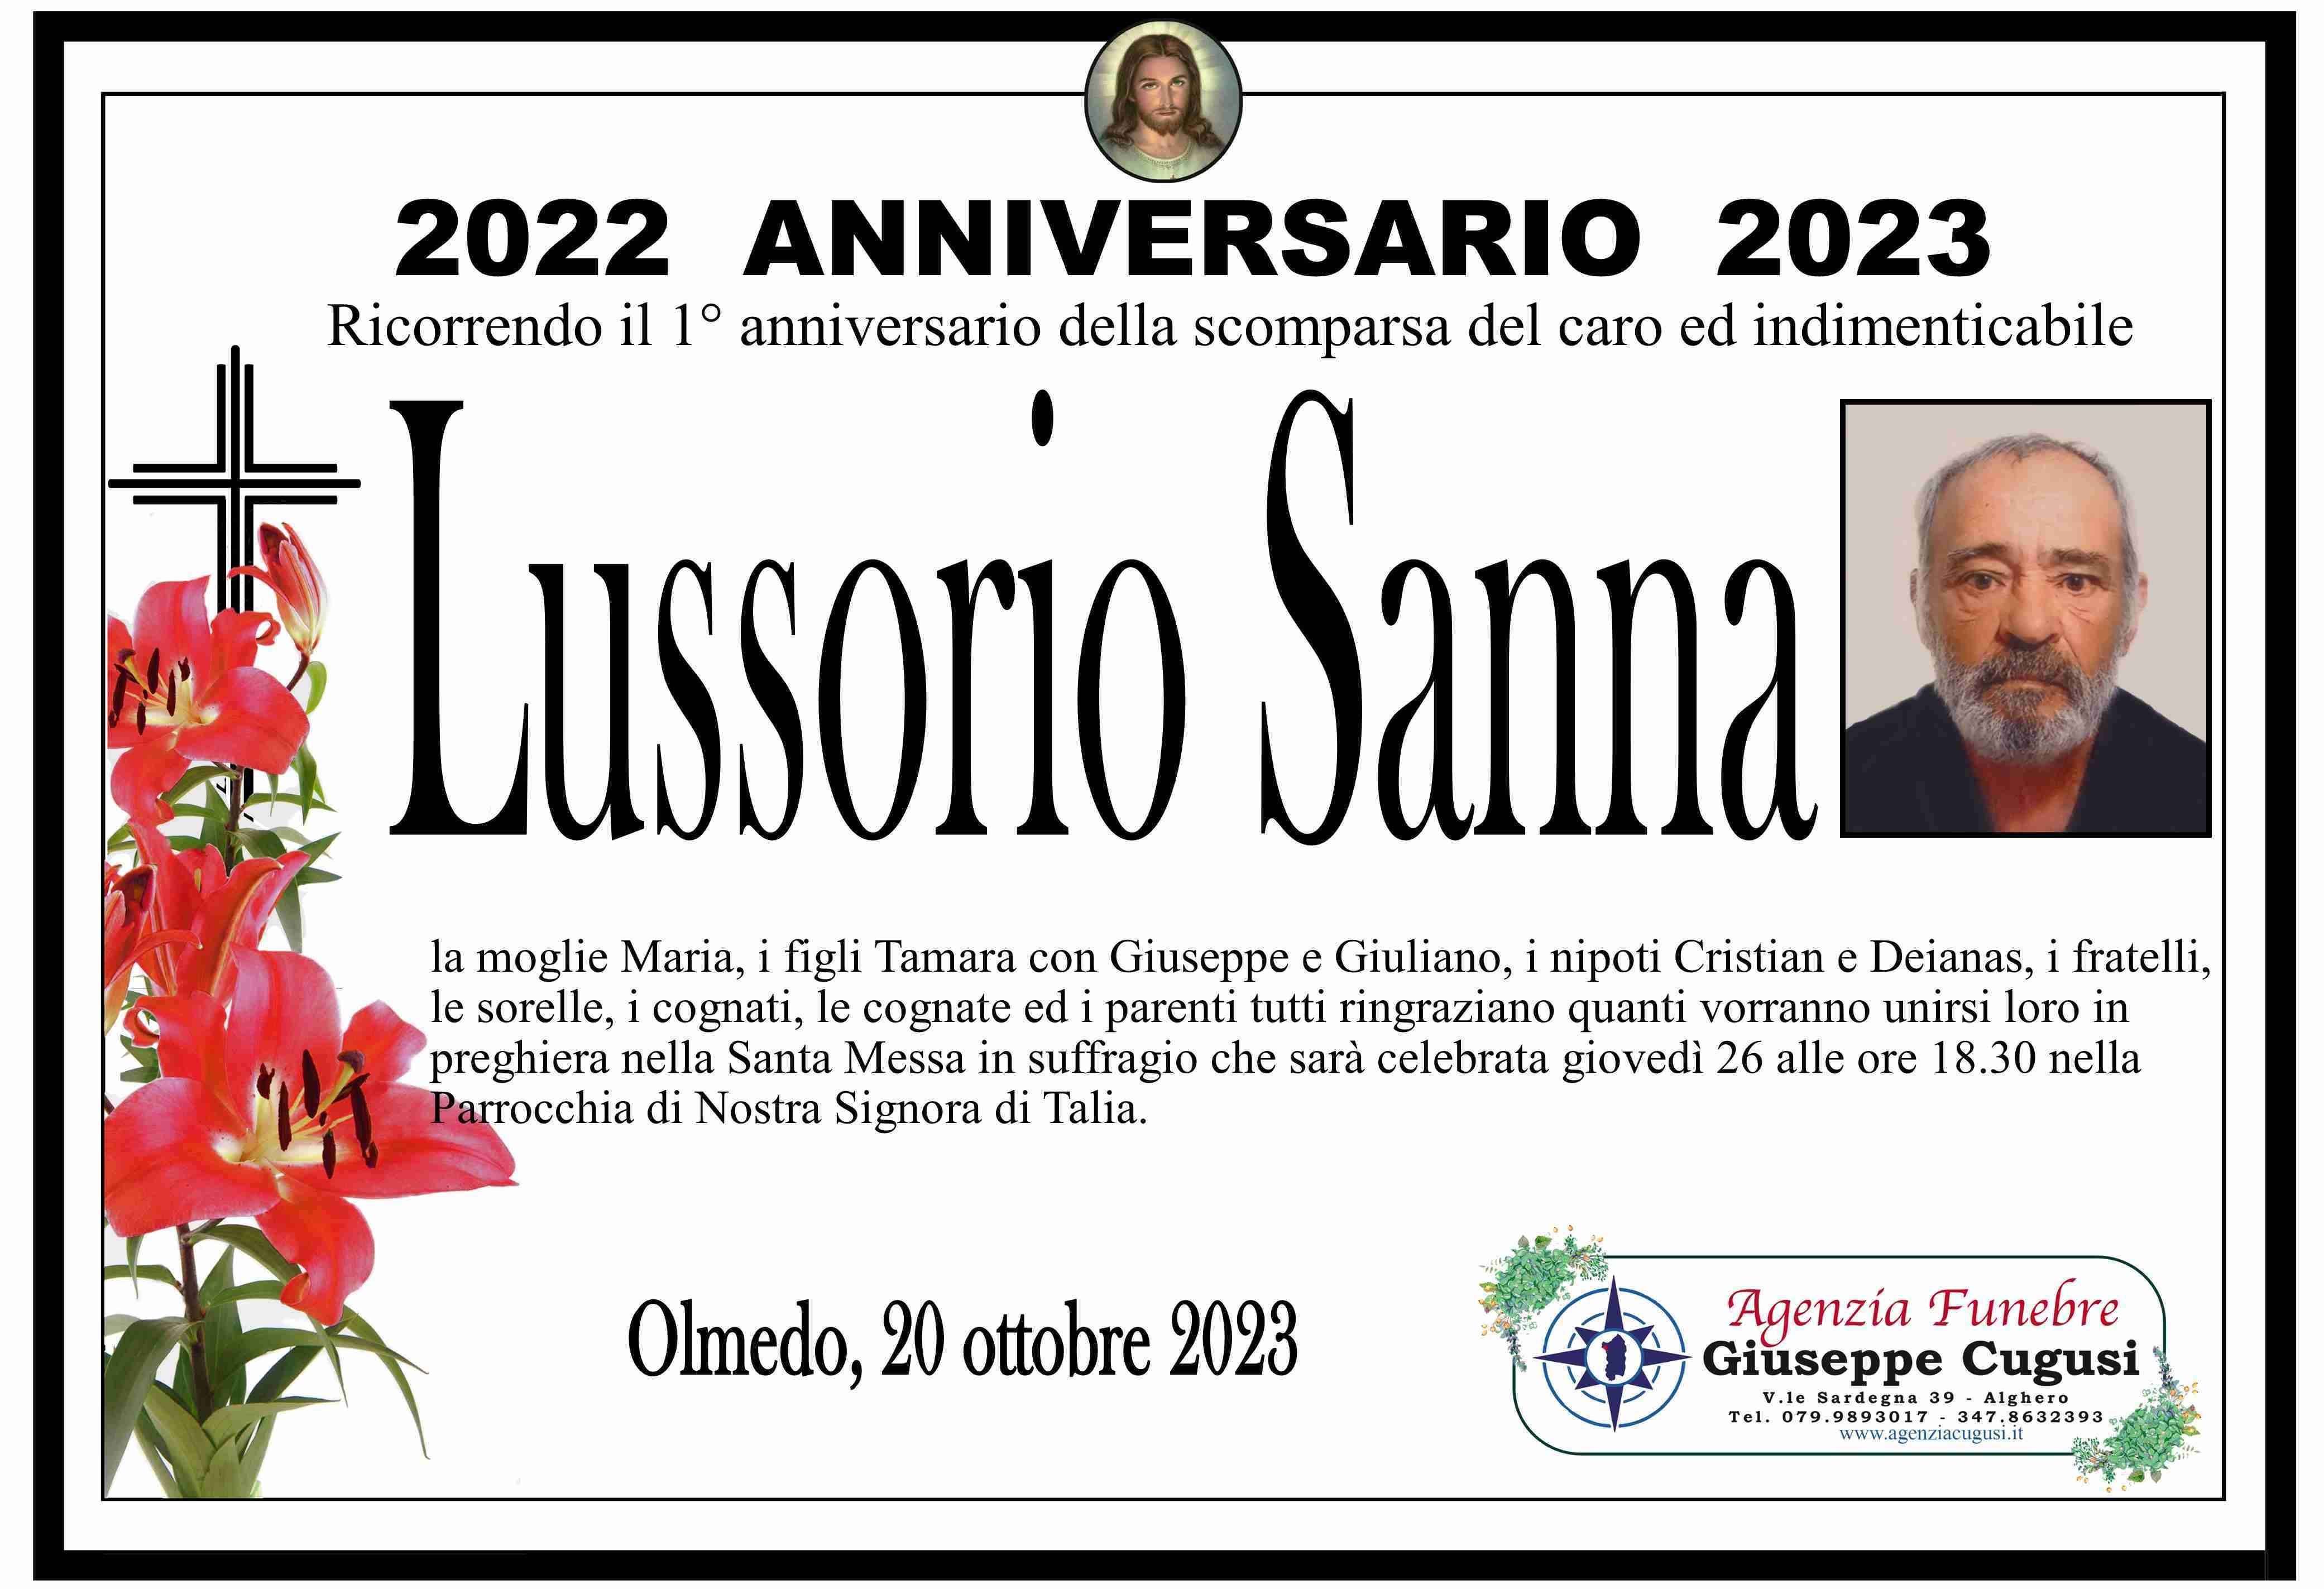 Lussorio Sanna